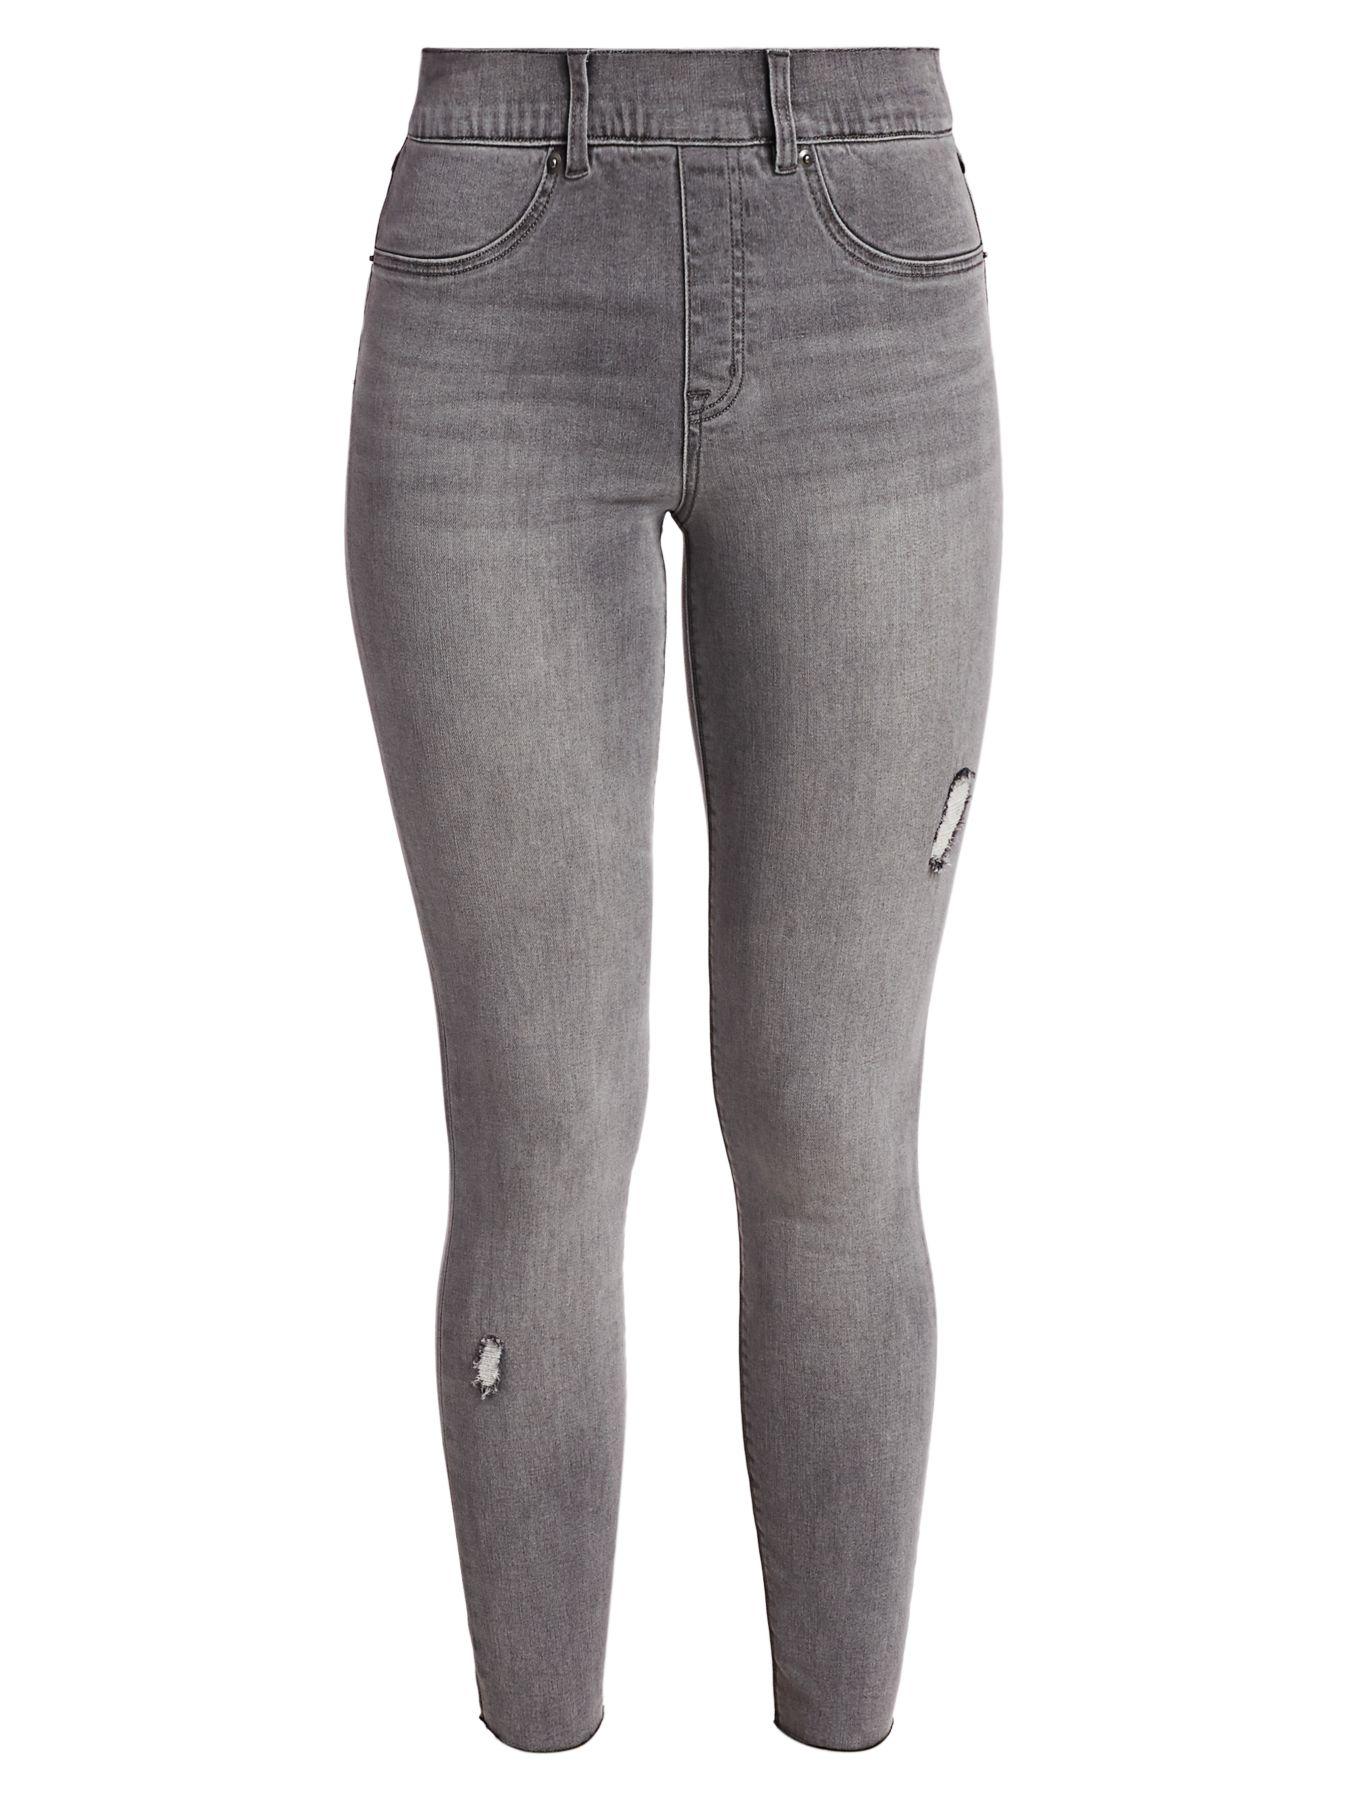 Spanx Denim High-waist Distressed Skinny Jeans in Vintage Grey (Gray ...